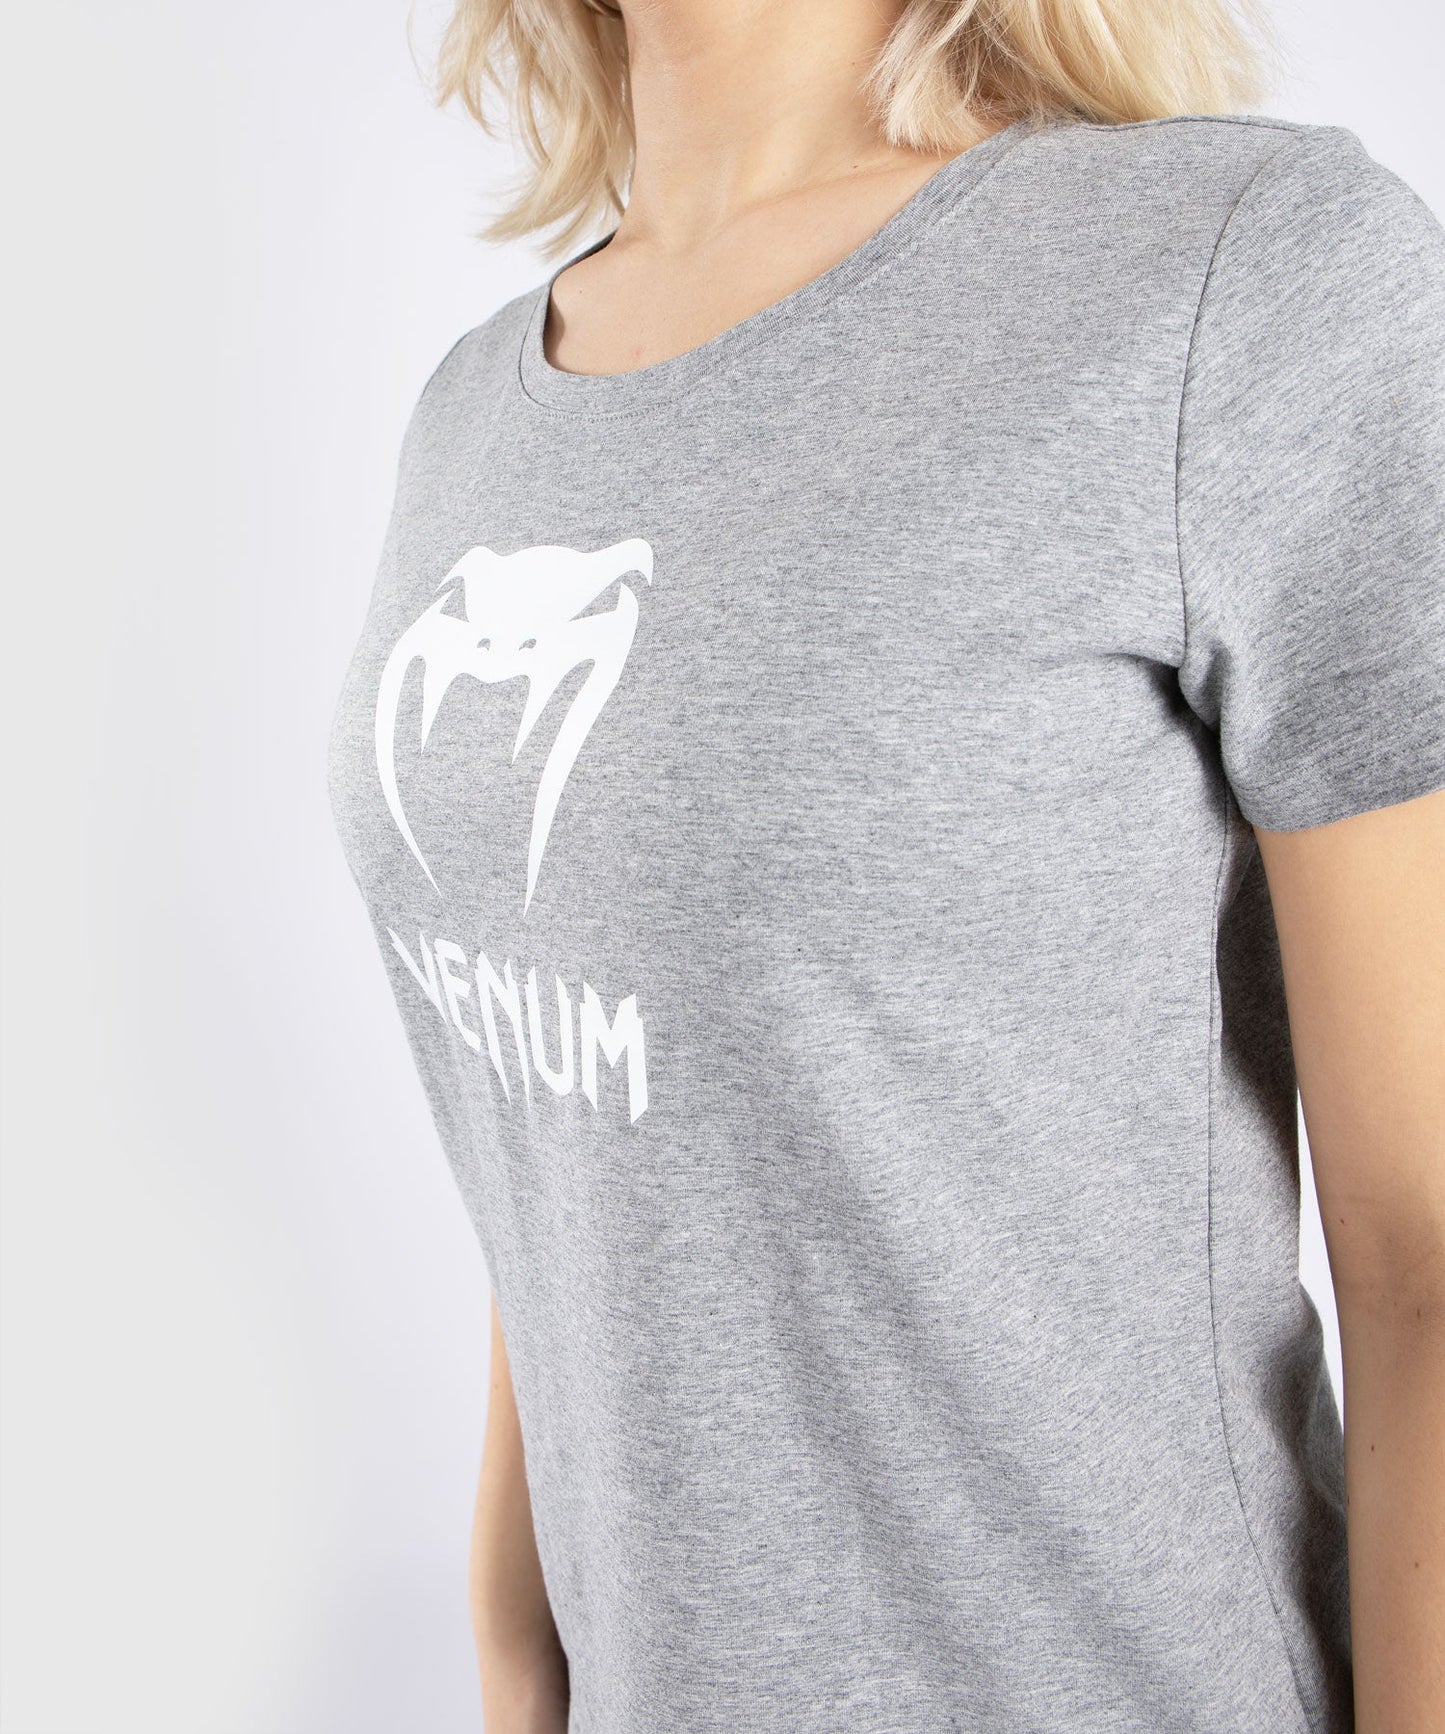 Venum Classic T-Shirt - For Women - Light Heather Grey